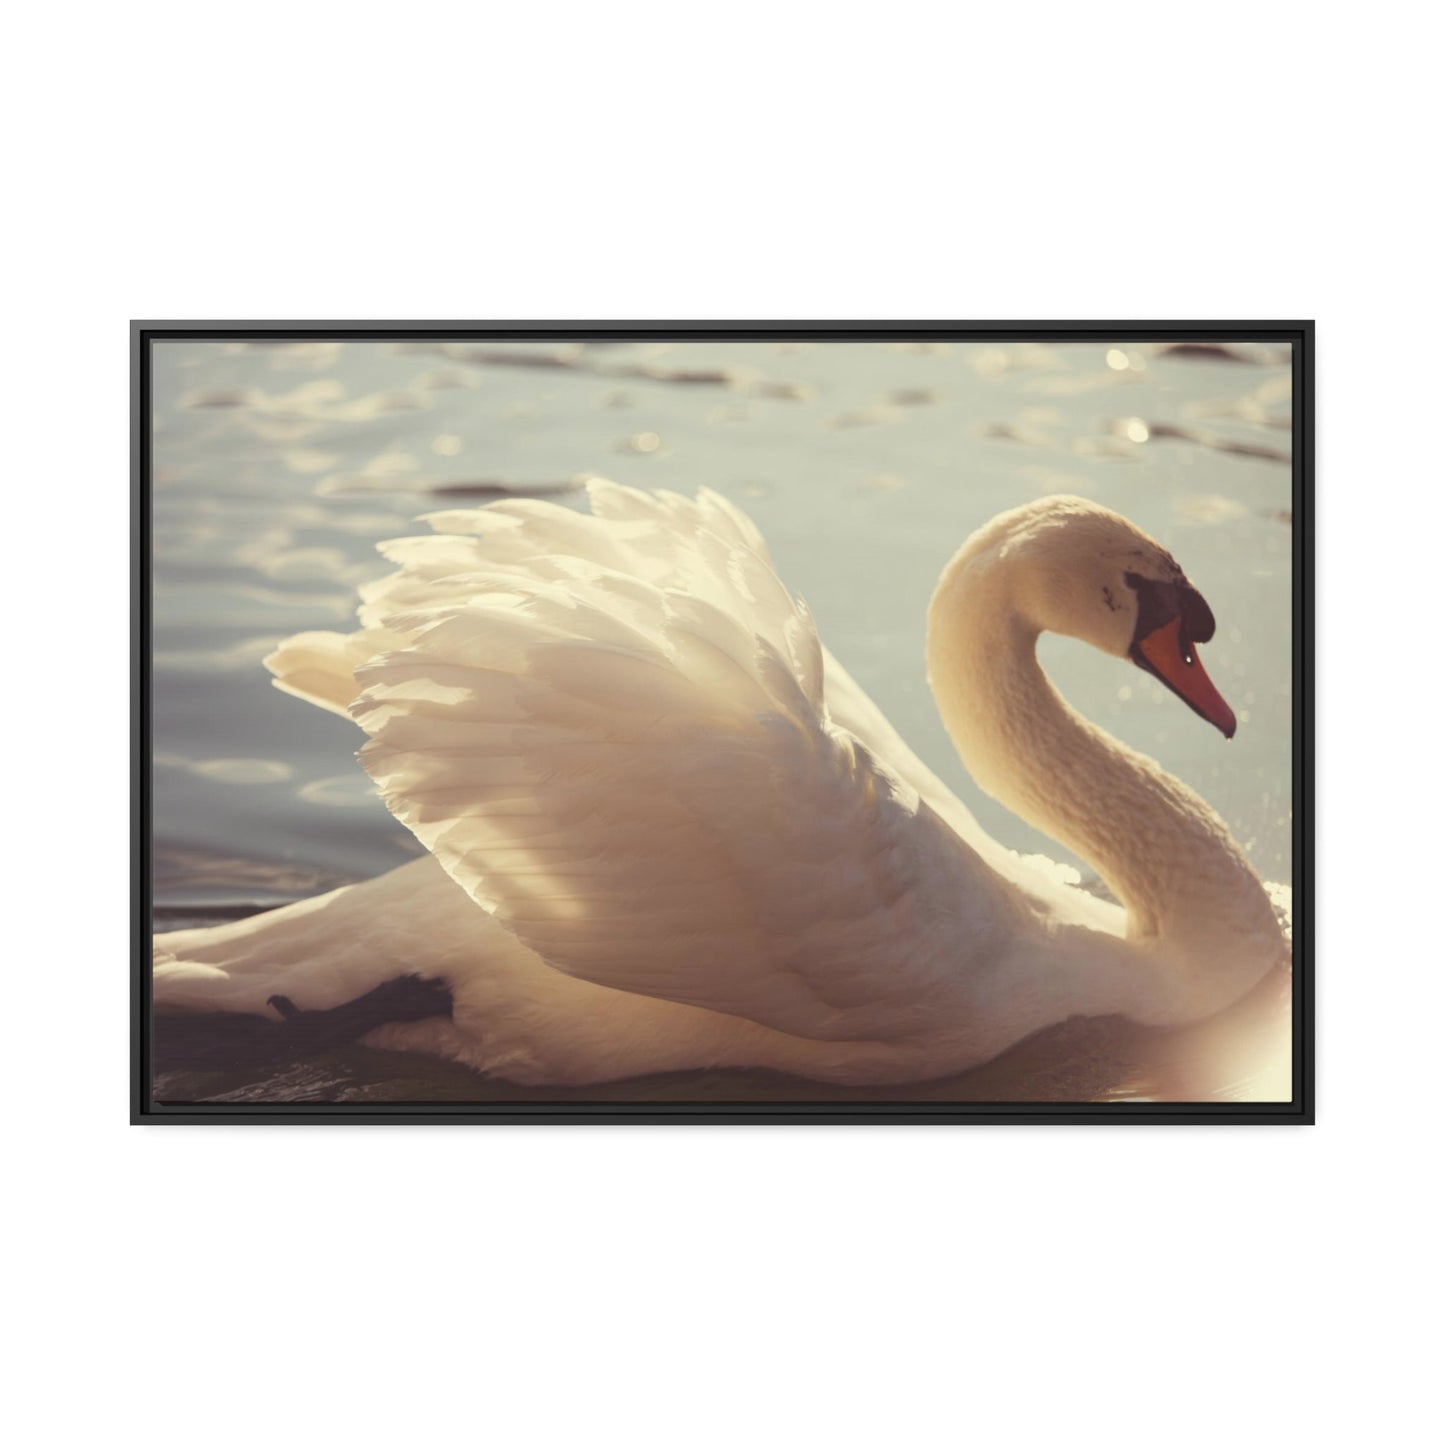 Elegant Grace: Natural Canvas Print Featuring Beautiful Swan